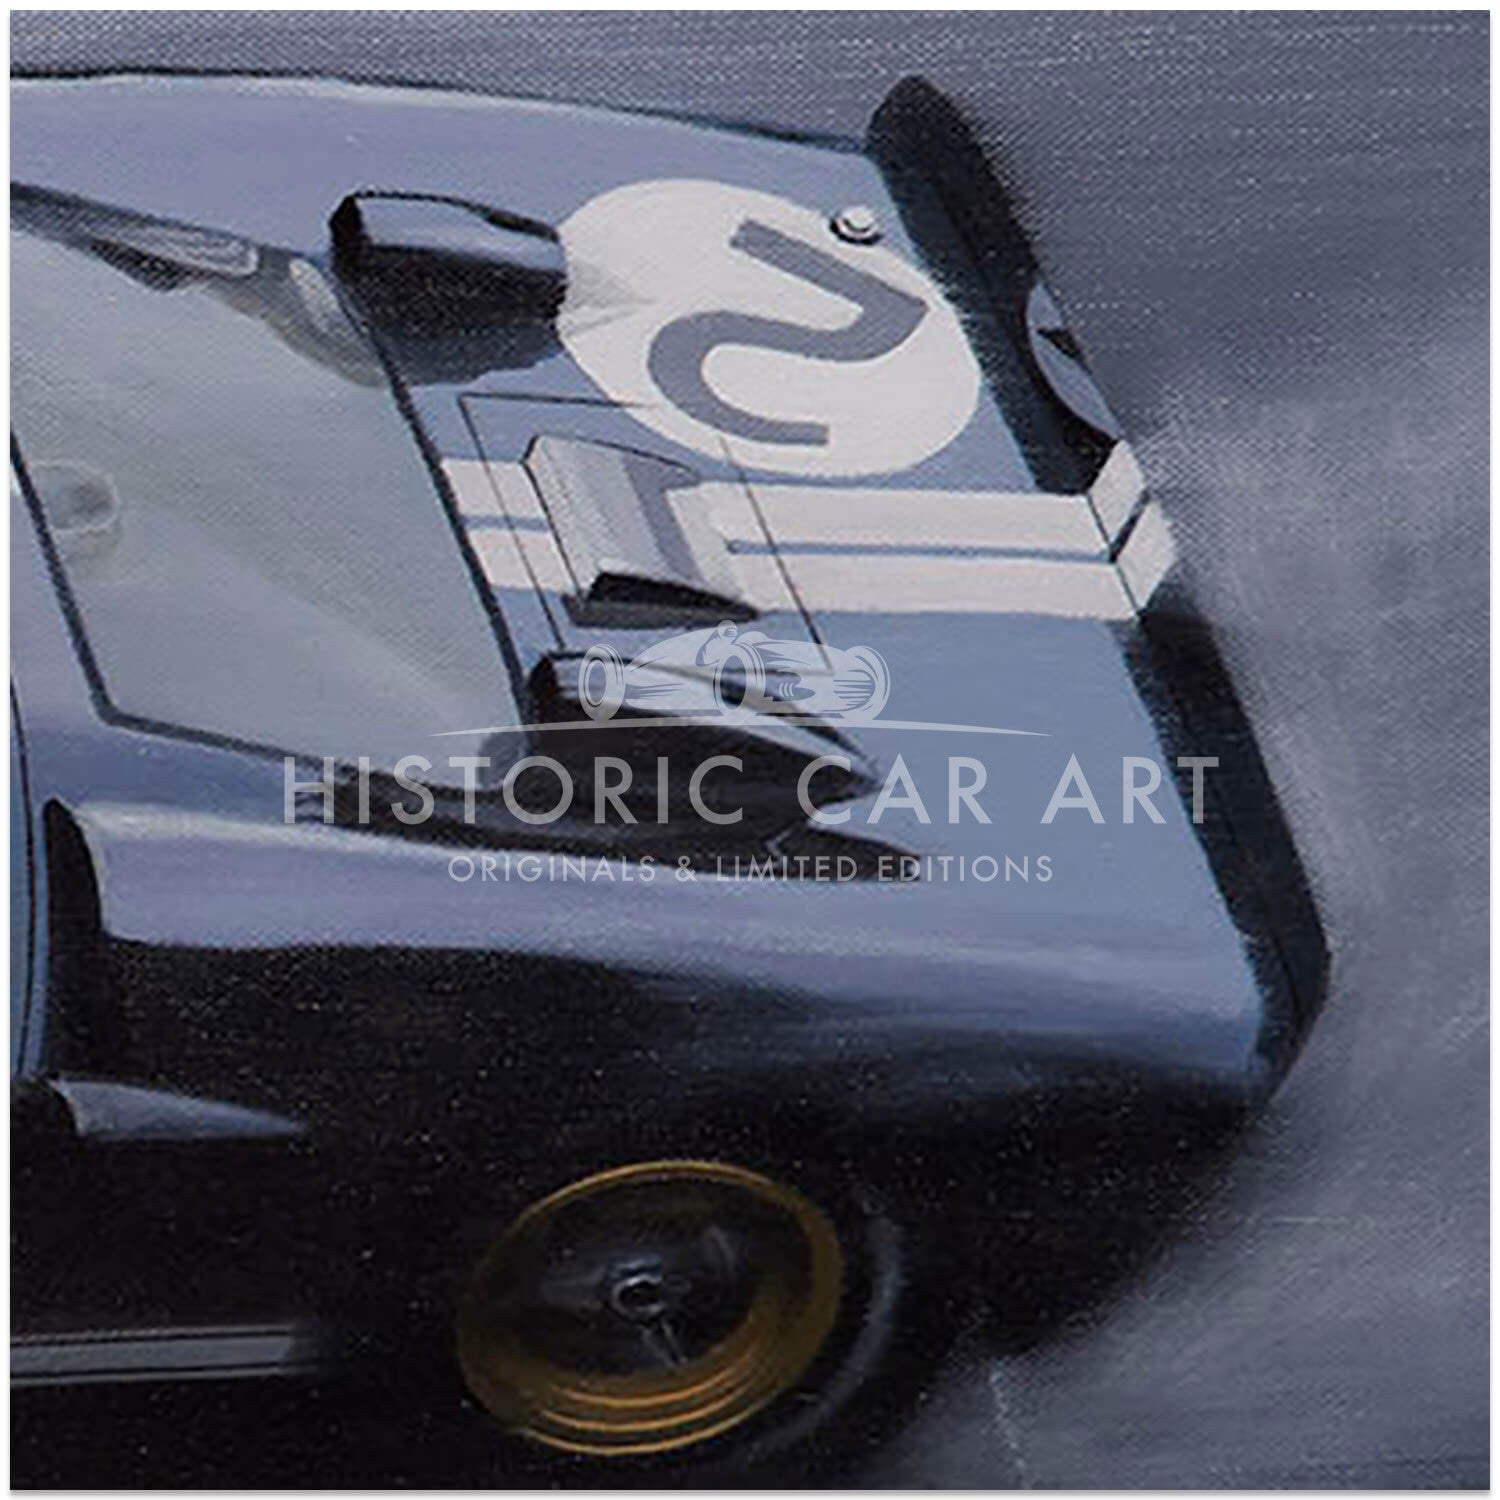 Henry's Dream | 1966 Le Mans | Chris Amon/Bruce McLaren | Art Print